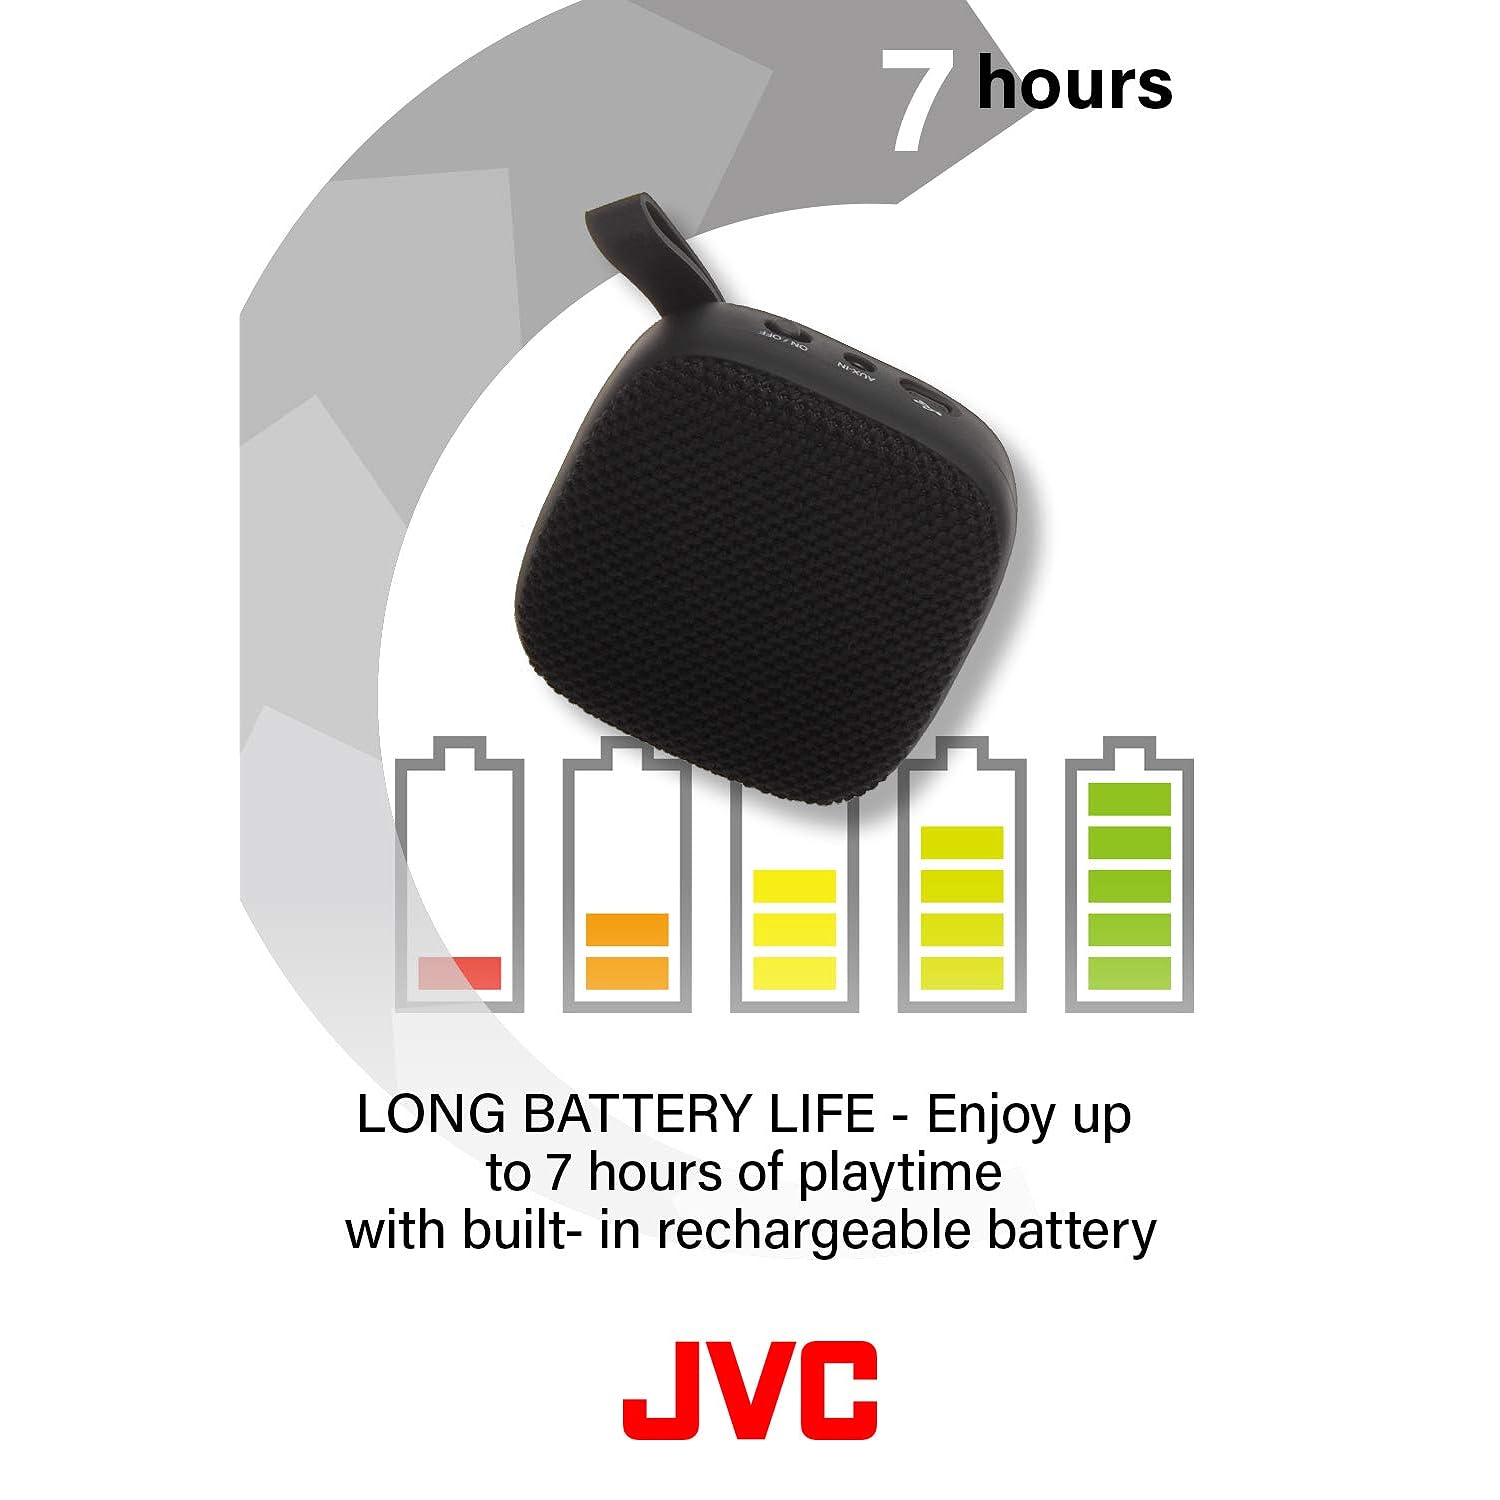 JVC Kenwood JVC Portable Wireless Speaker with Surround Sound, Bluetooth 5.0, 7-Hour Battery Life - SPSA1BTP (Pink)